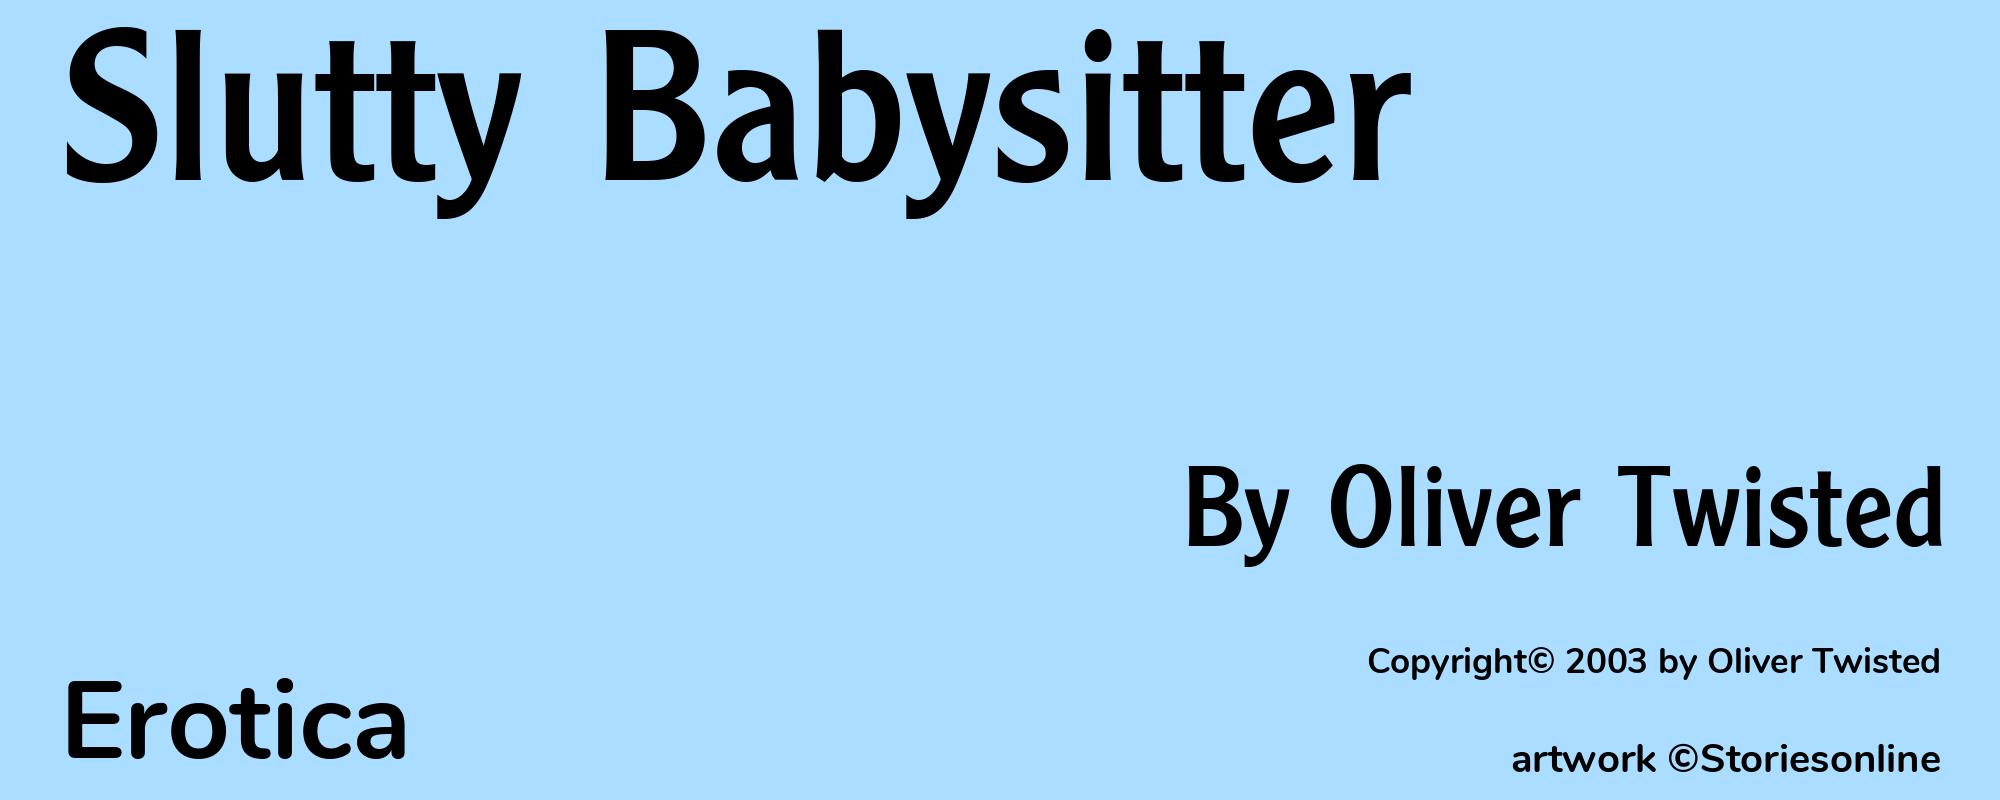 Slutty Babysitter - Cover